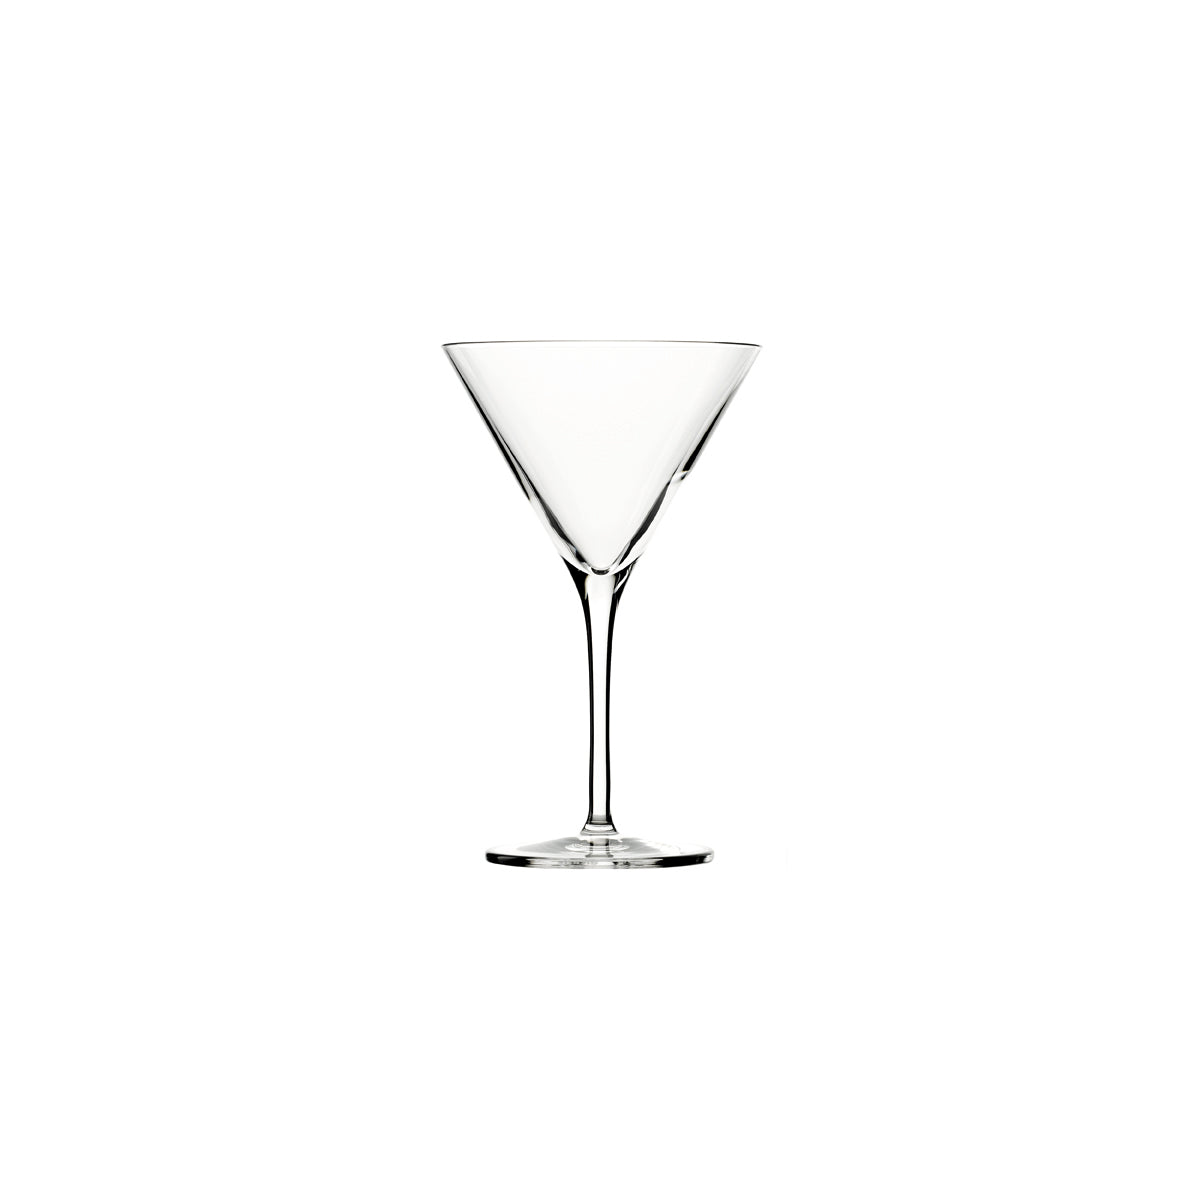 360-034 Stolzle Classic Cocktail 250ml Tomkin Australia Hospitality Supplies